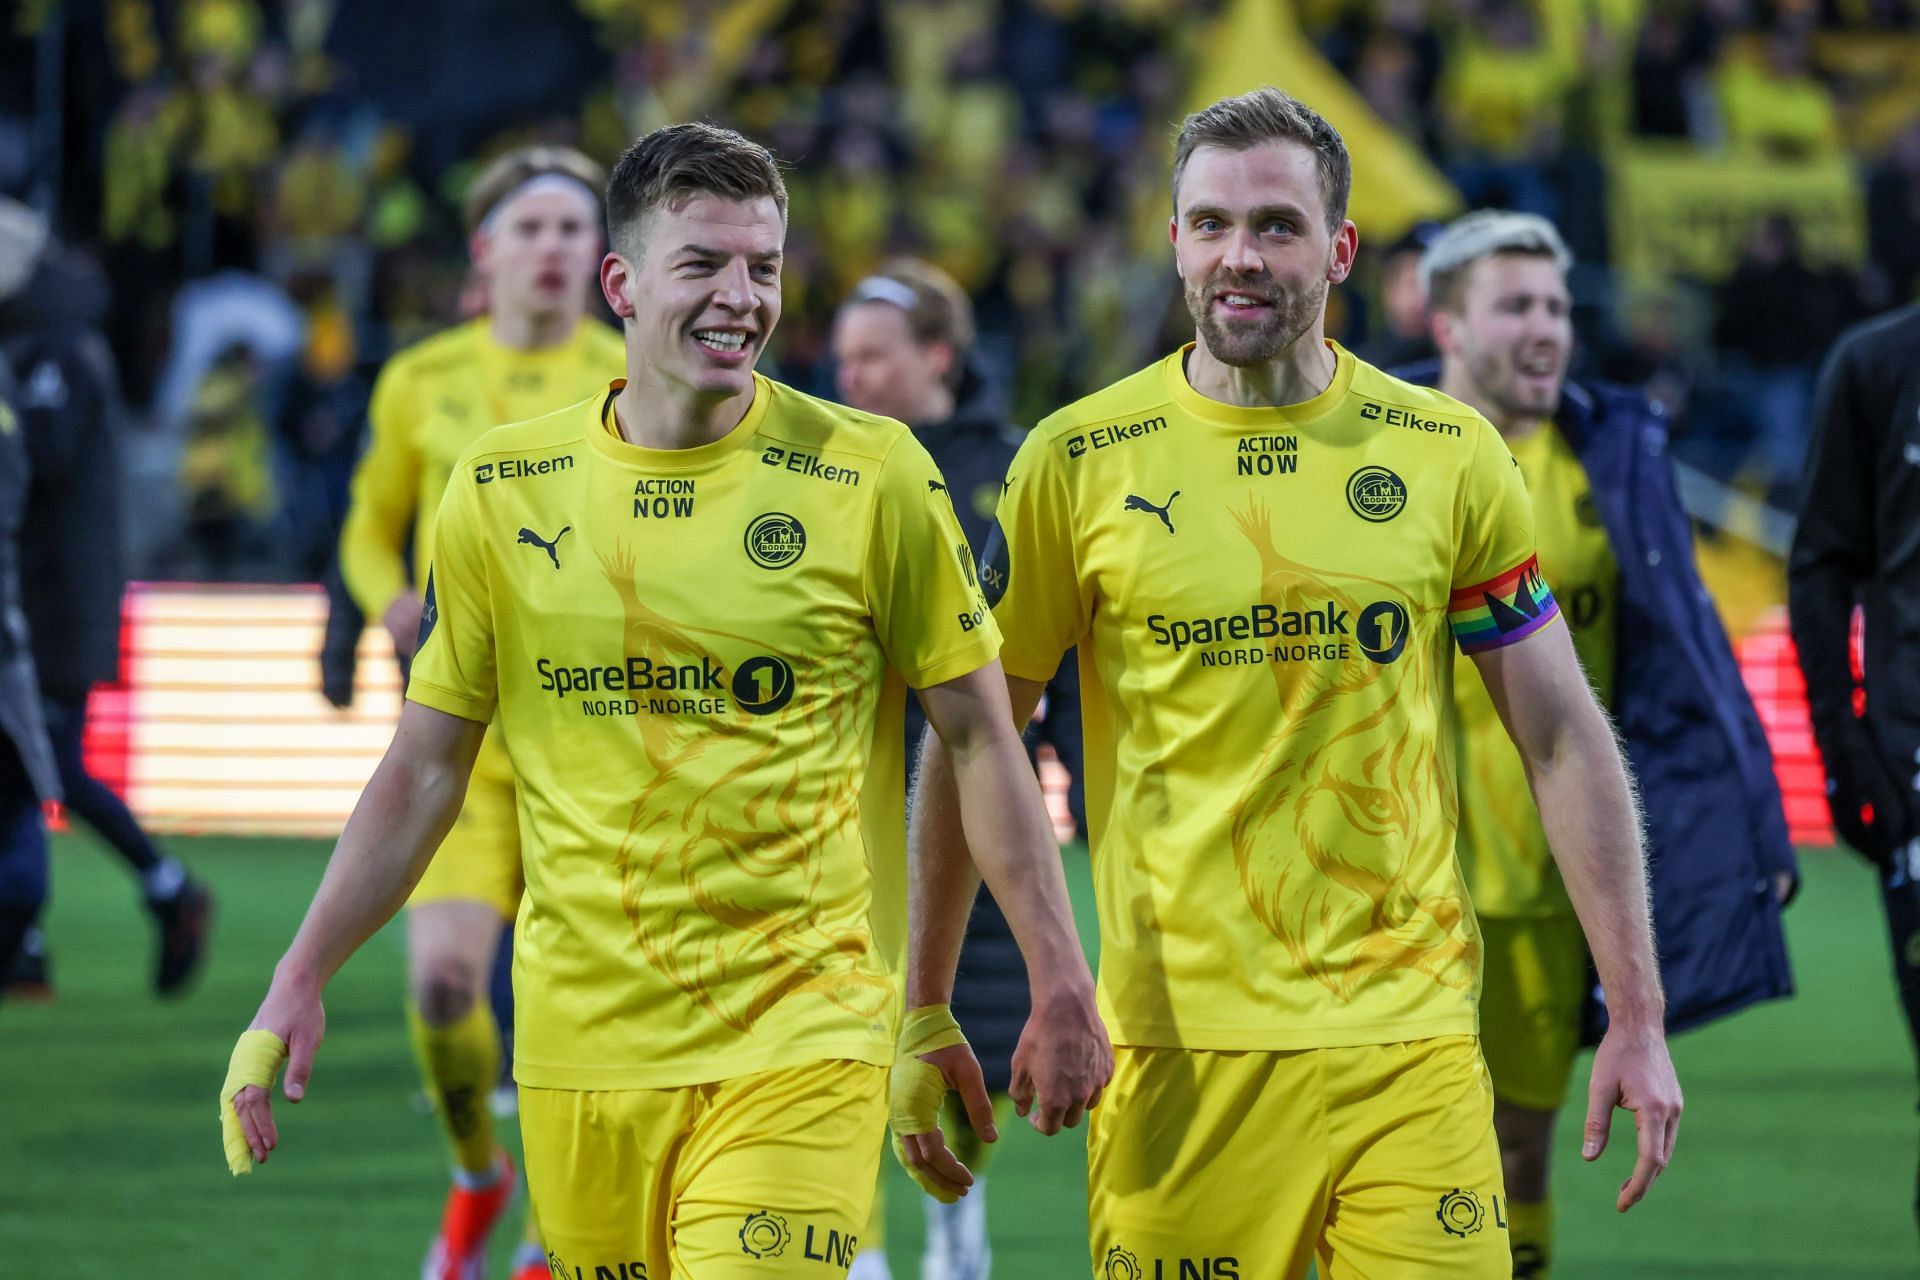 Bodo/Glimt face Rosenborg on Saturday 